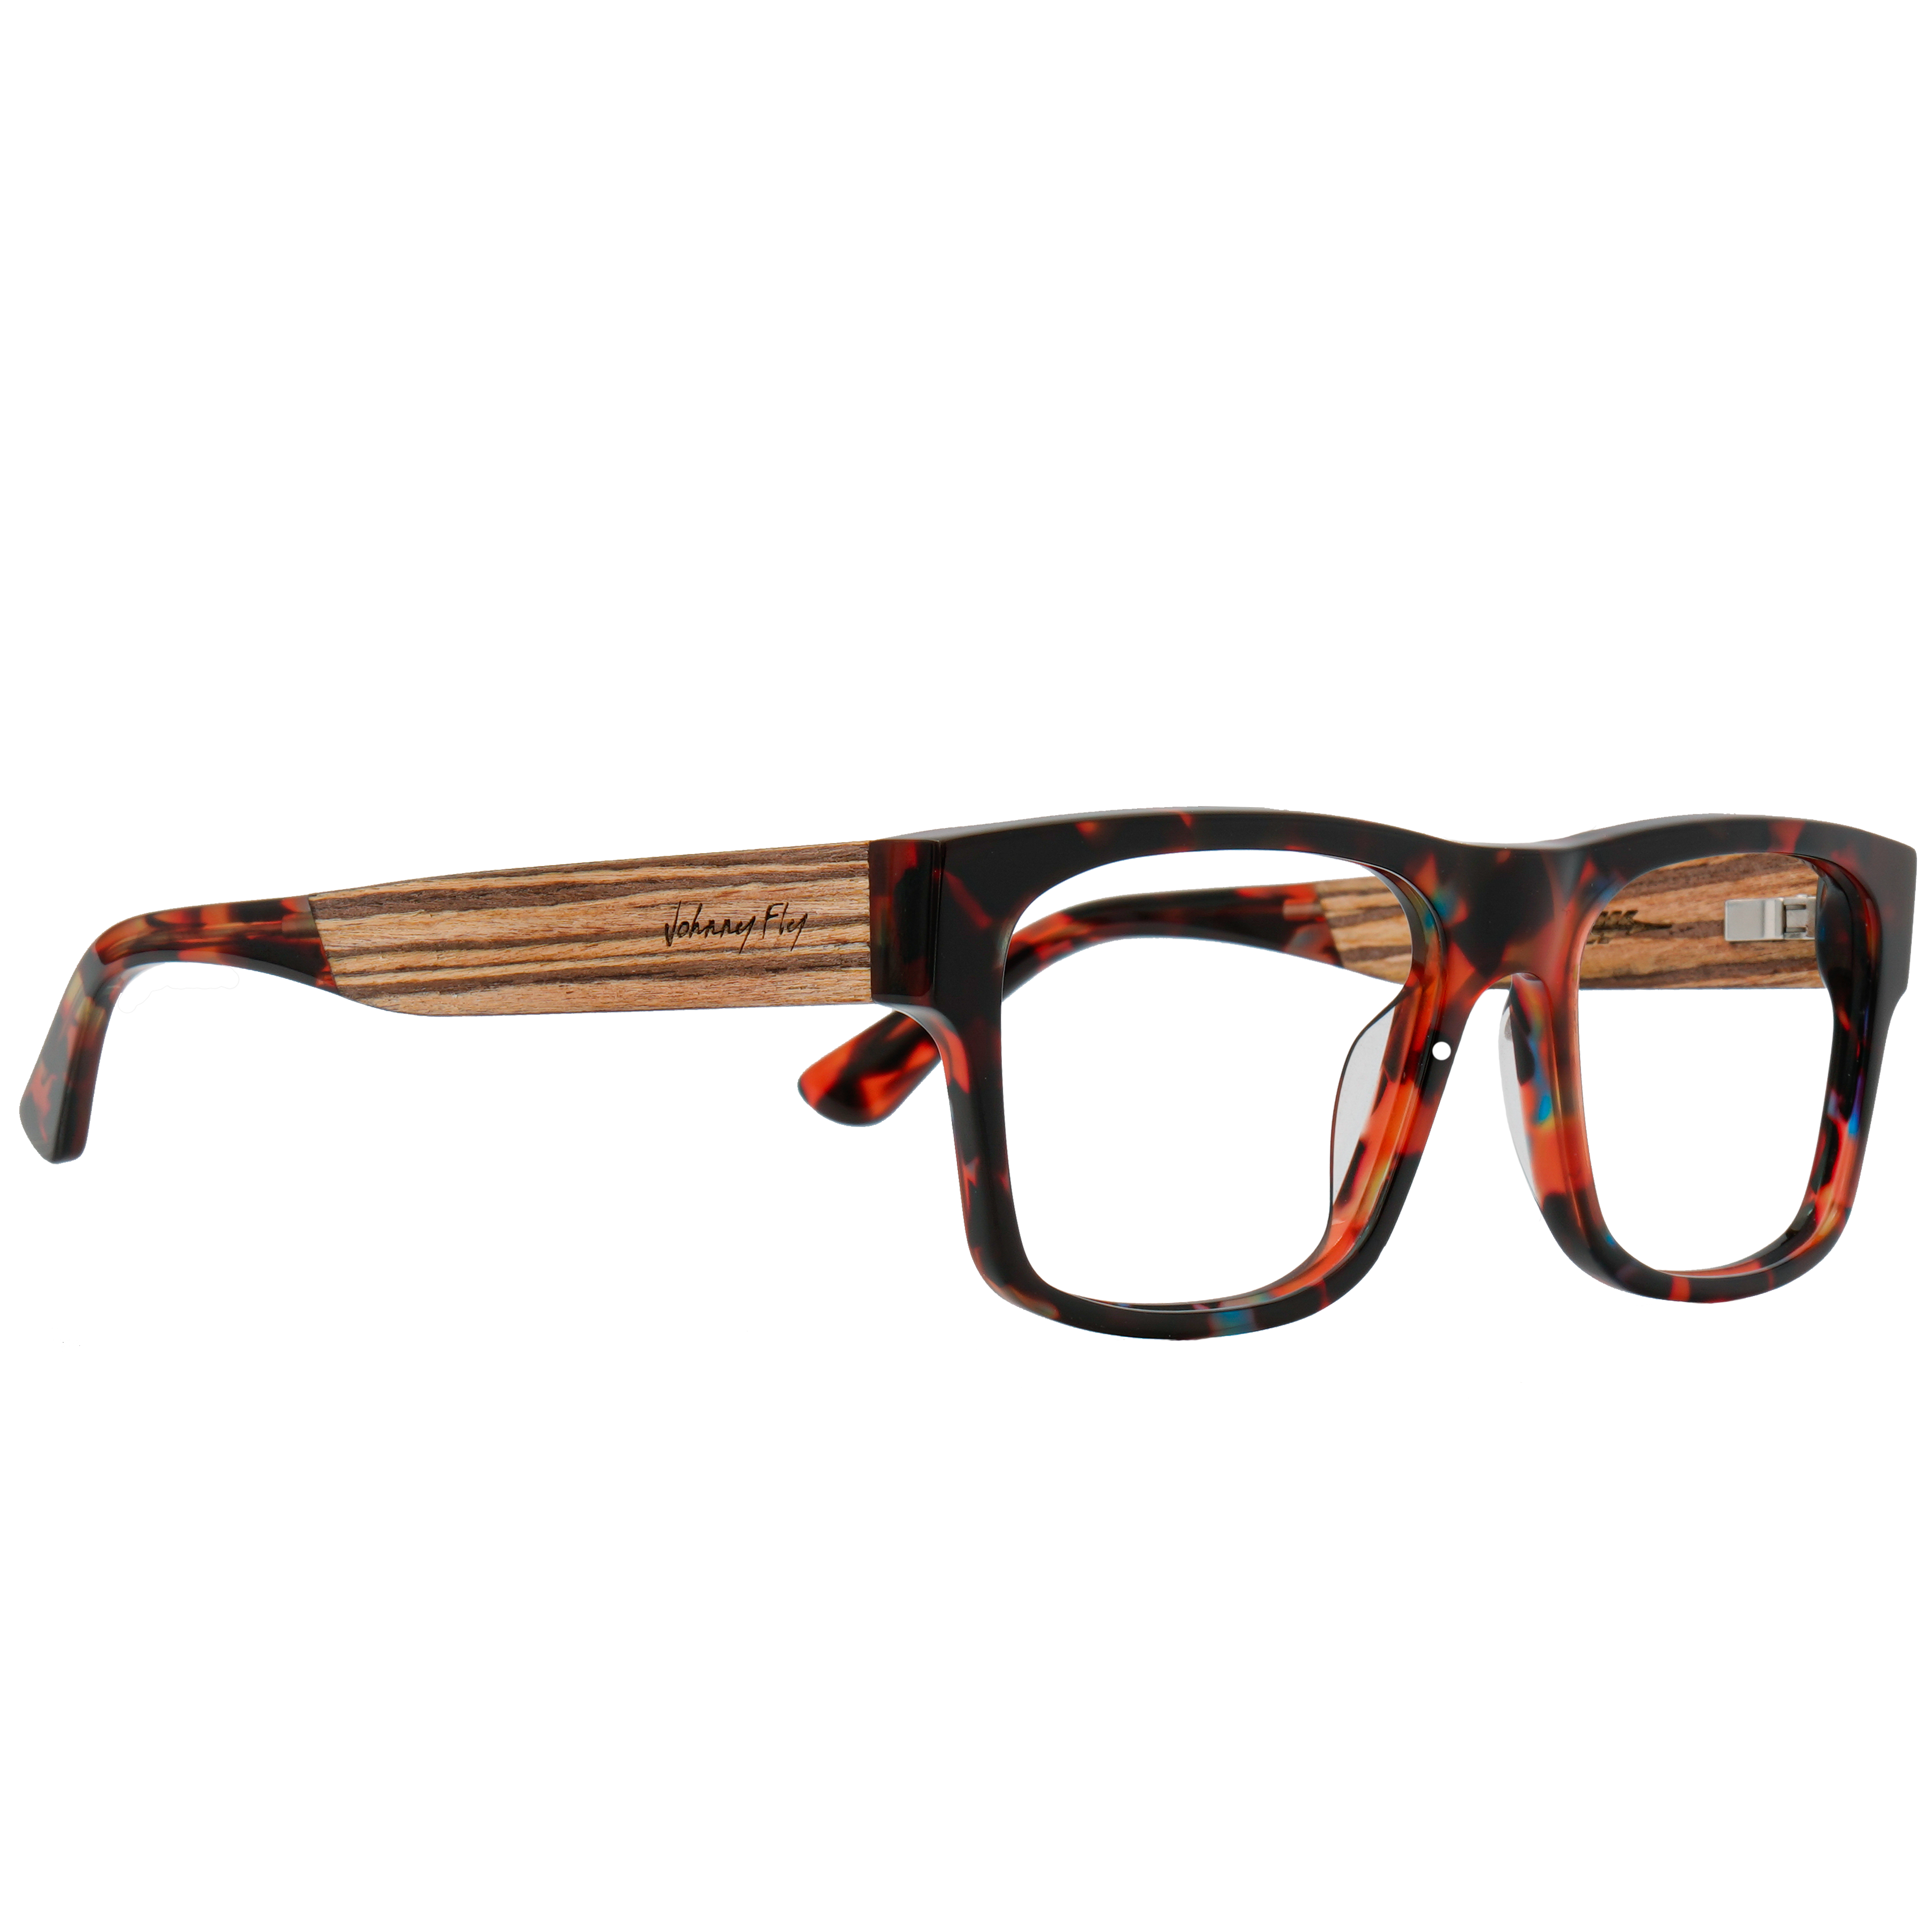 ARROW Frame - Space - Eyeglasses Frame - Johnny Fly Eyewear 